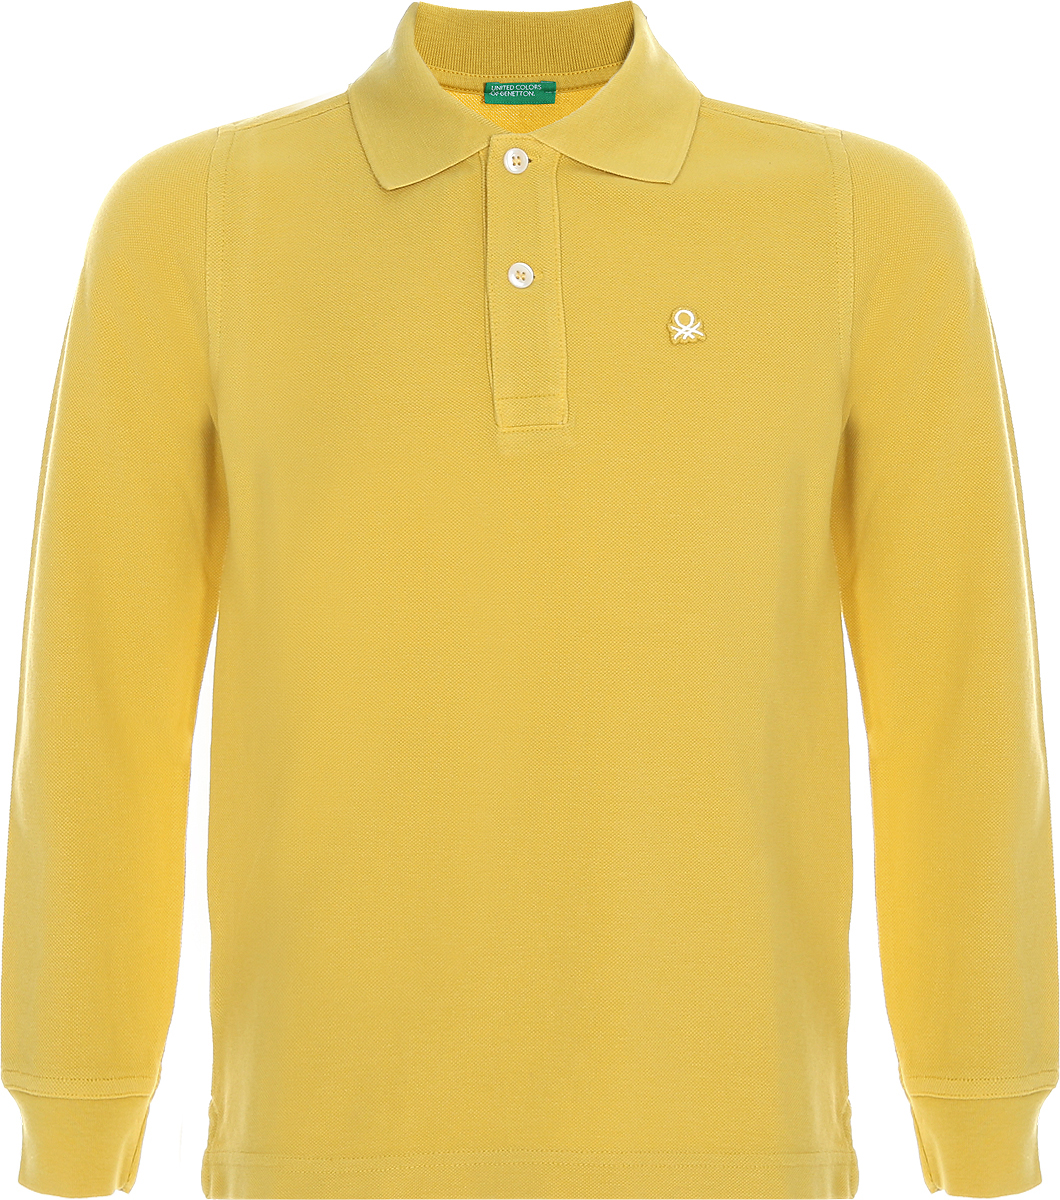 Кофта для мальчика United Colors of Benetton, цвет: желтый. 3089C3090_36H. Размер 140